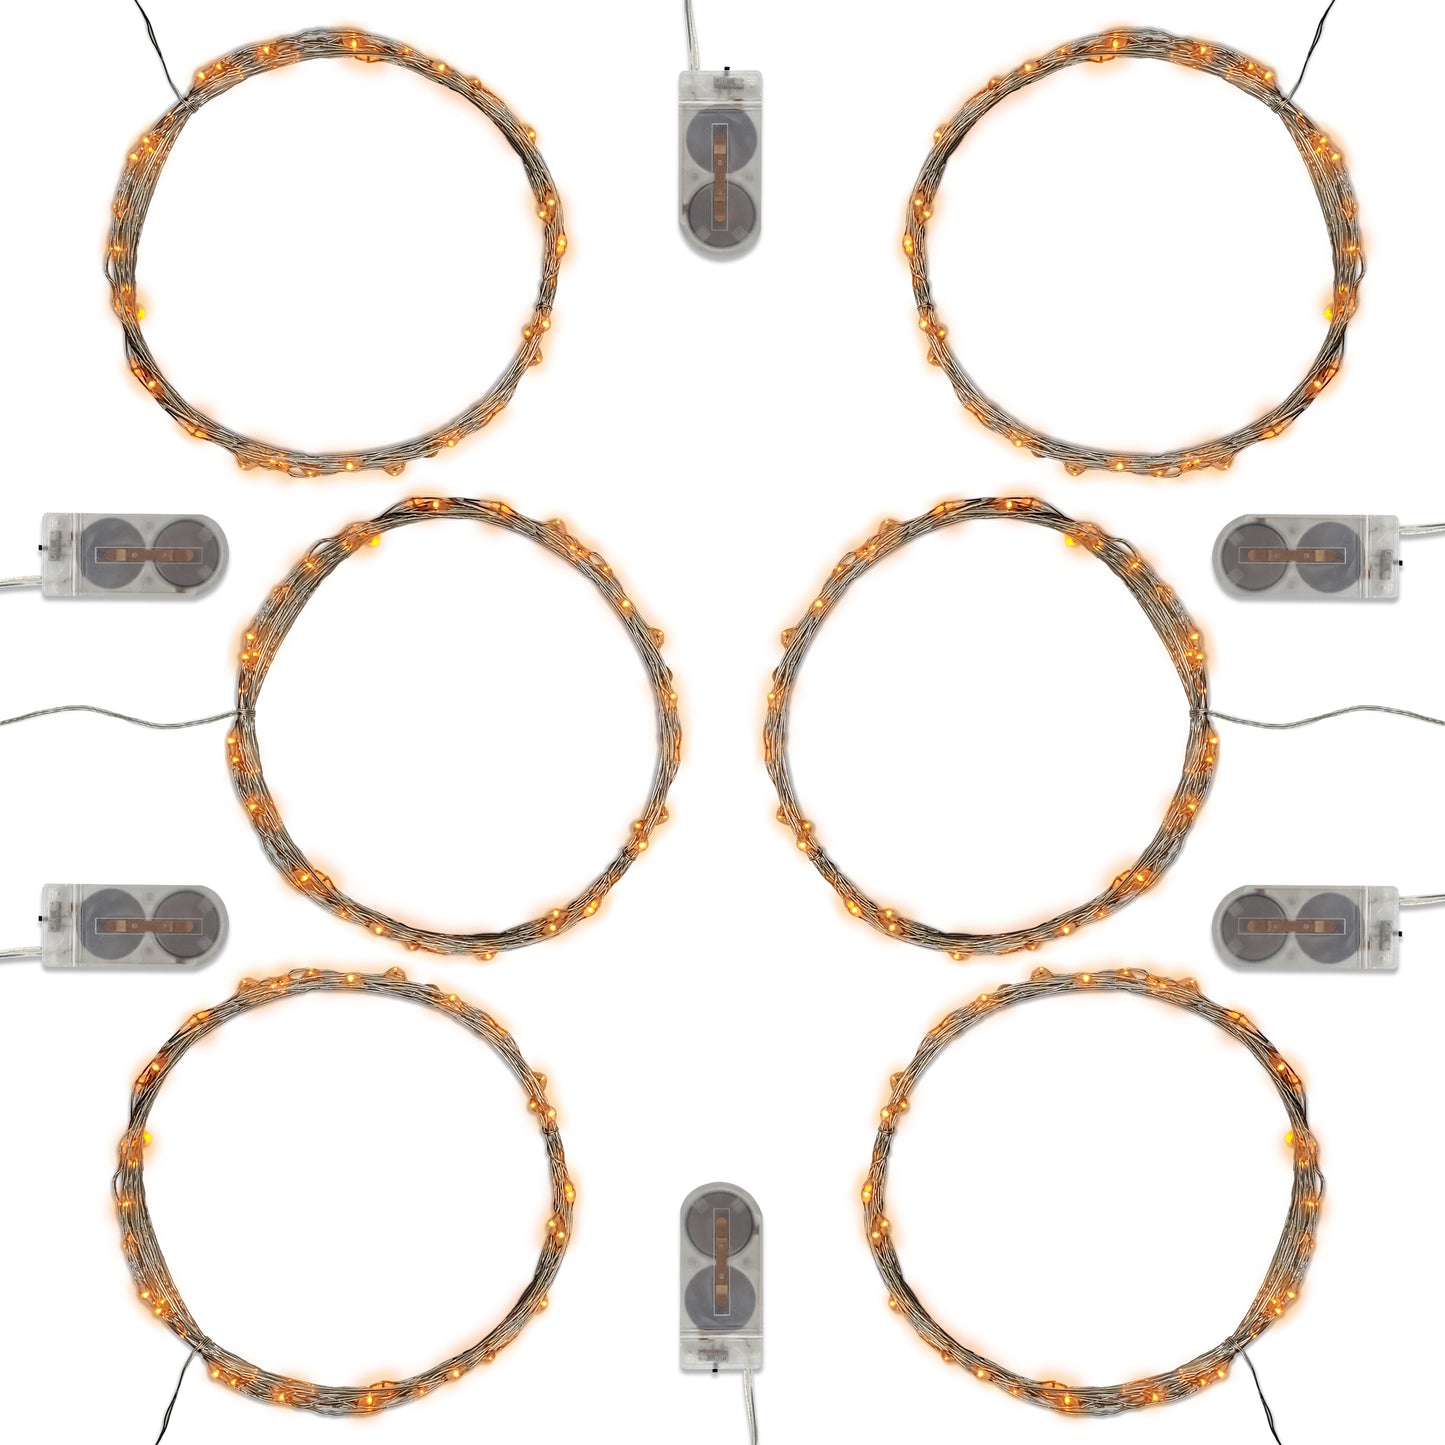 Battery Operated LED Fairy String Lights - Set of 6 - Orange